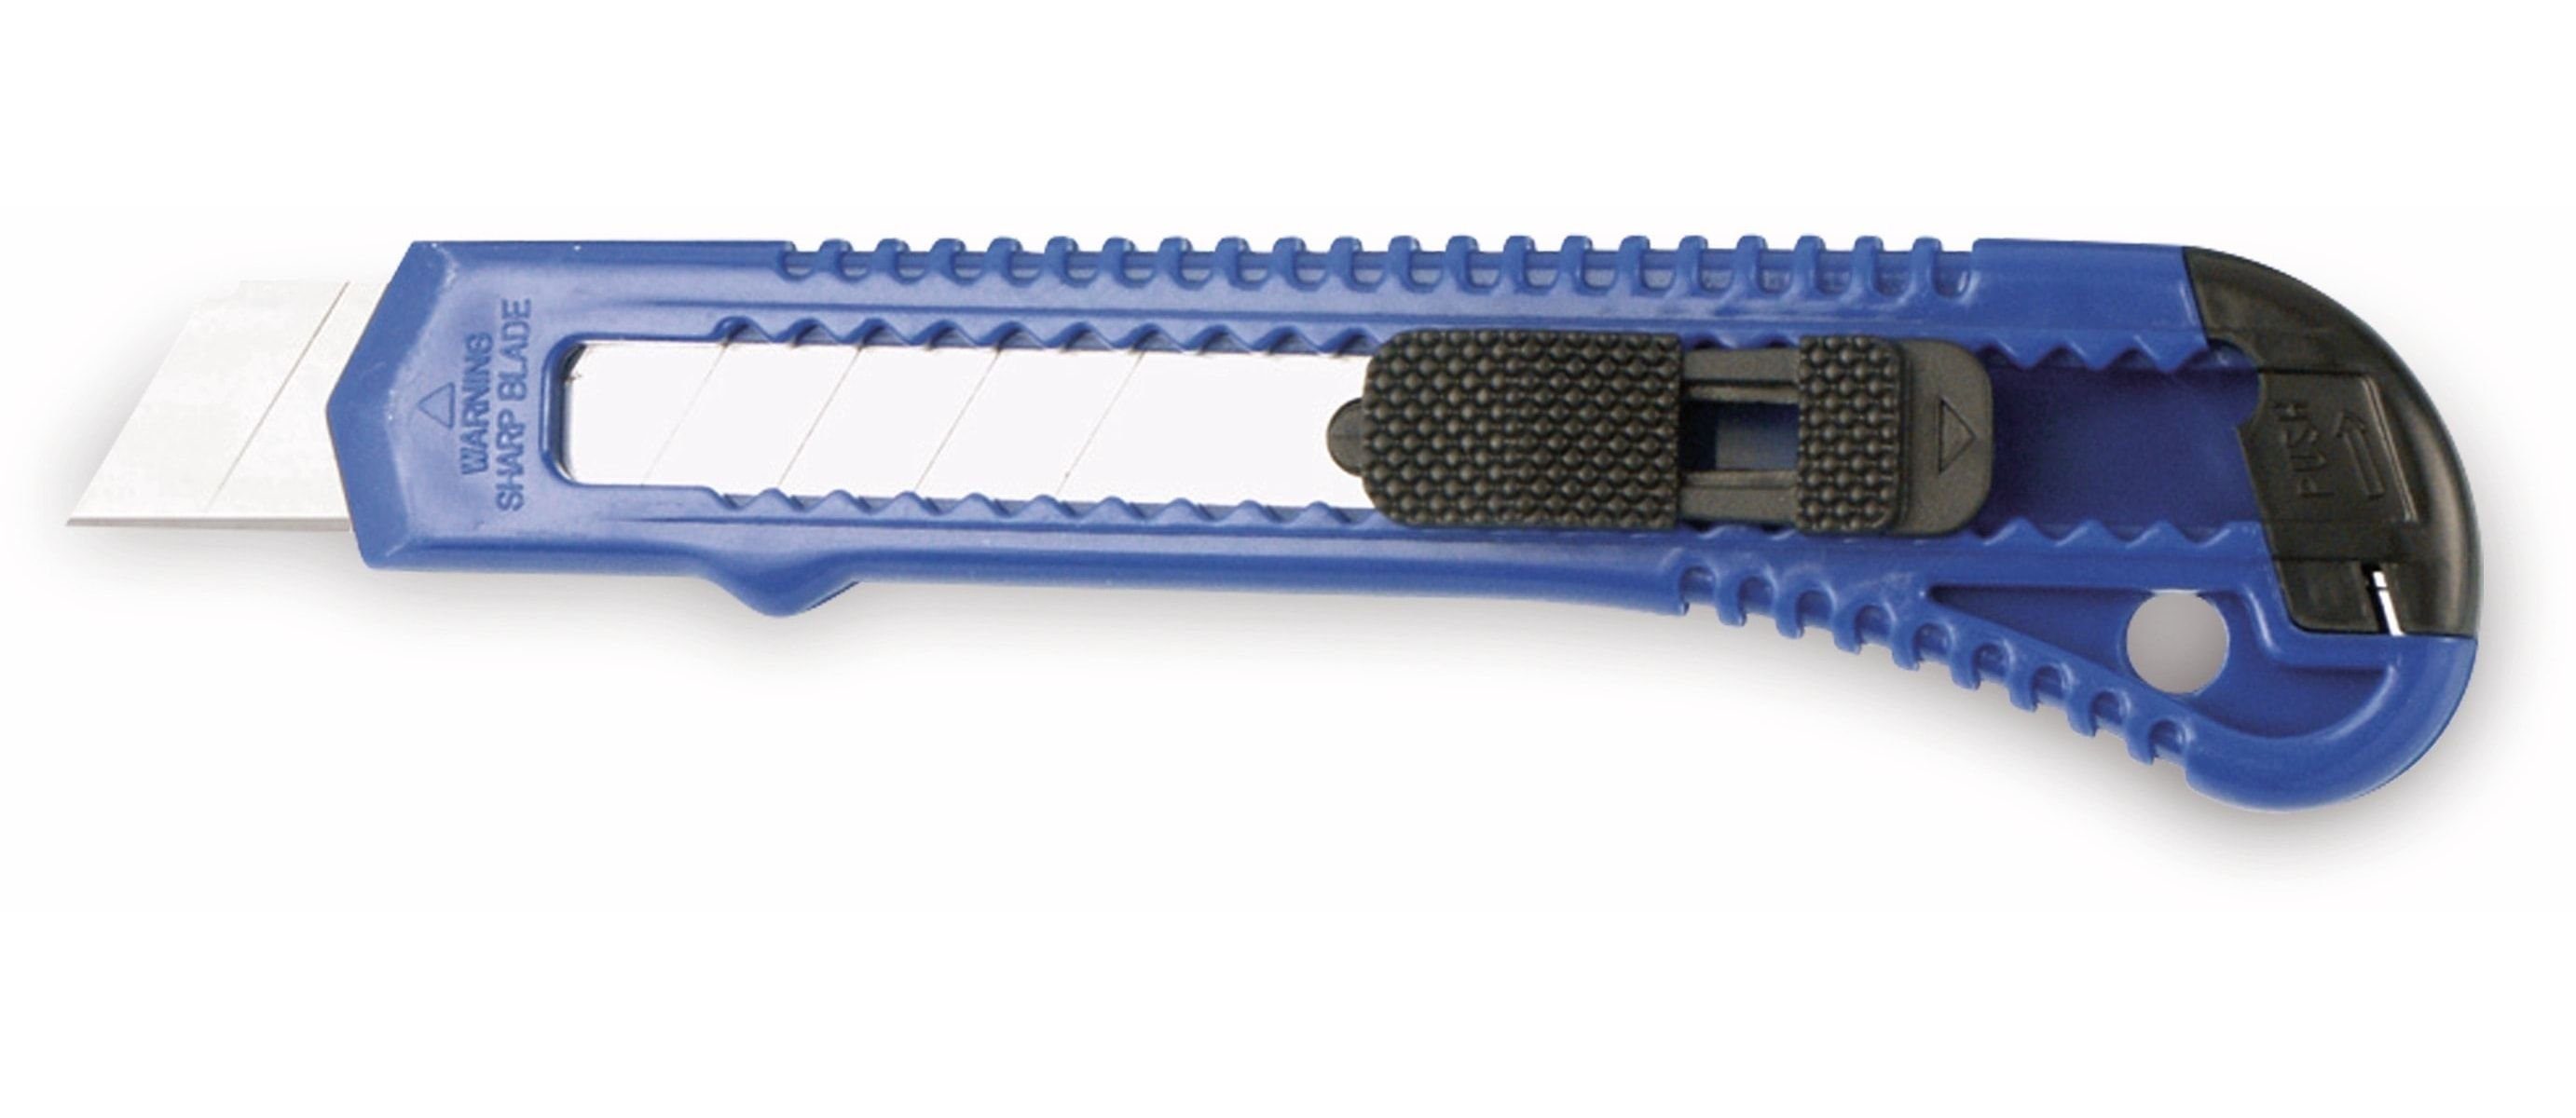 BGS technic mm, 150 BGS Universal-Messer, blau TECHNIC Allesschneider